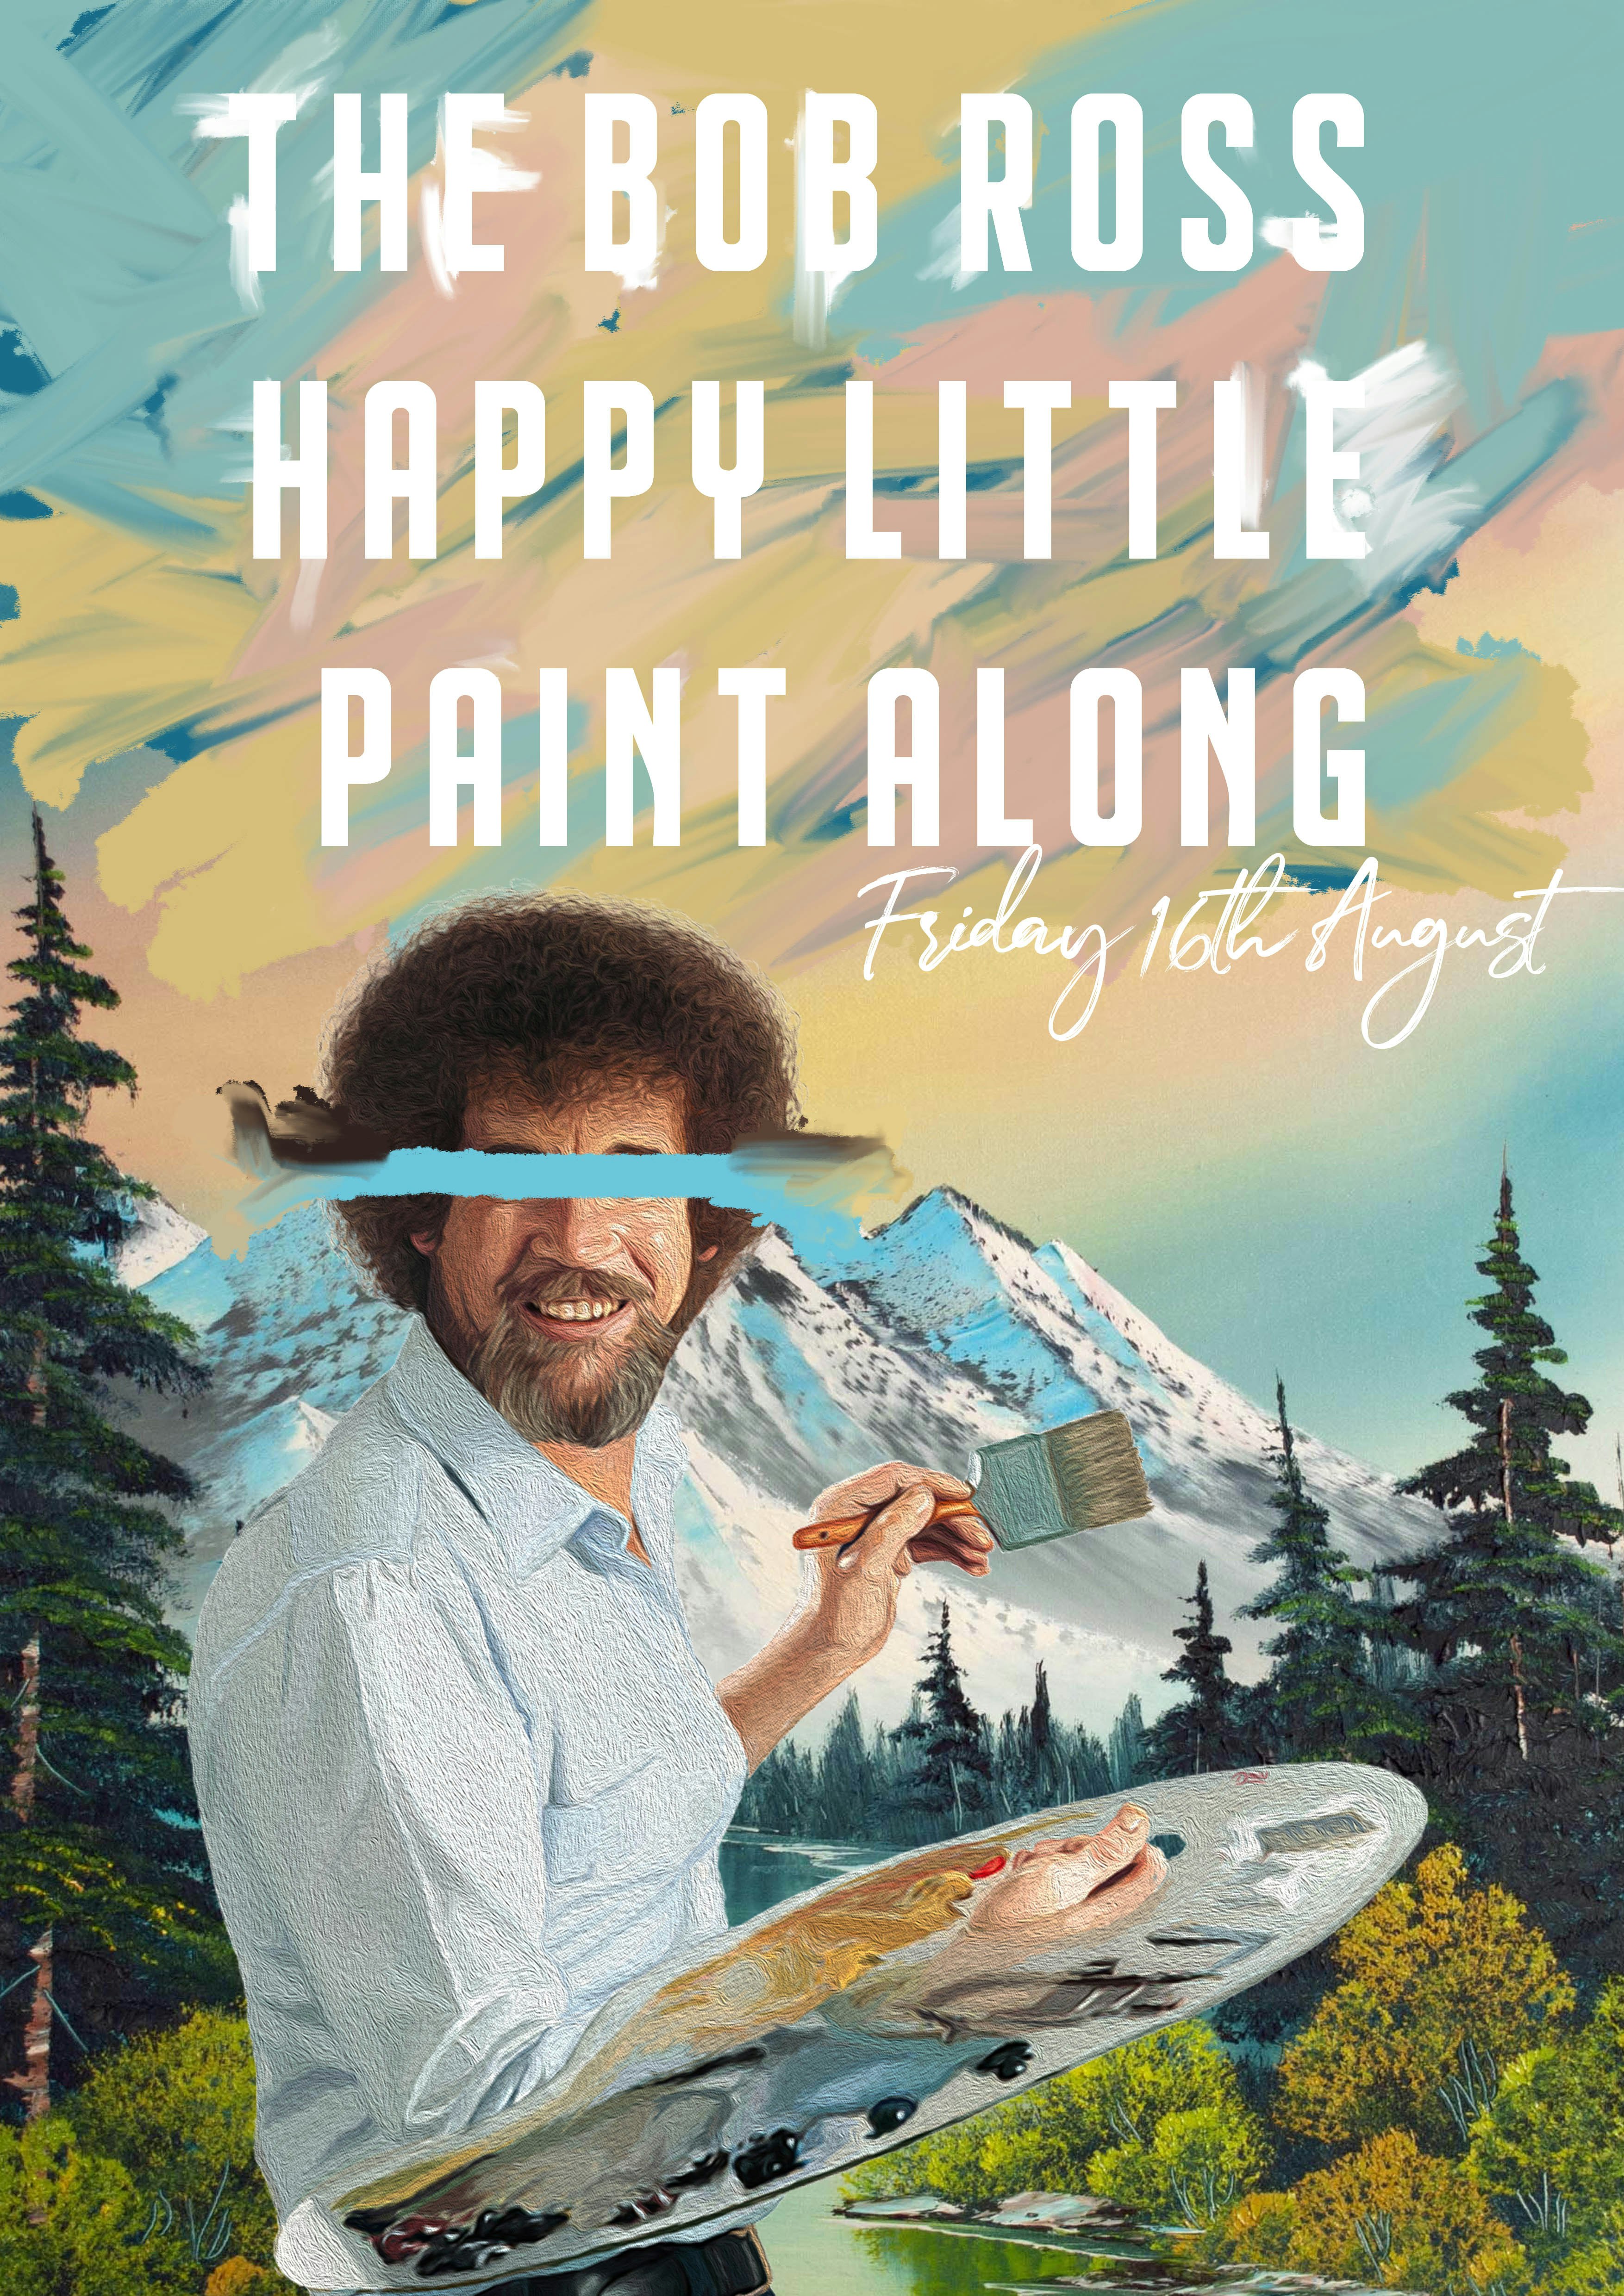 The Bob Ross Happy Little Paint Along 4